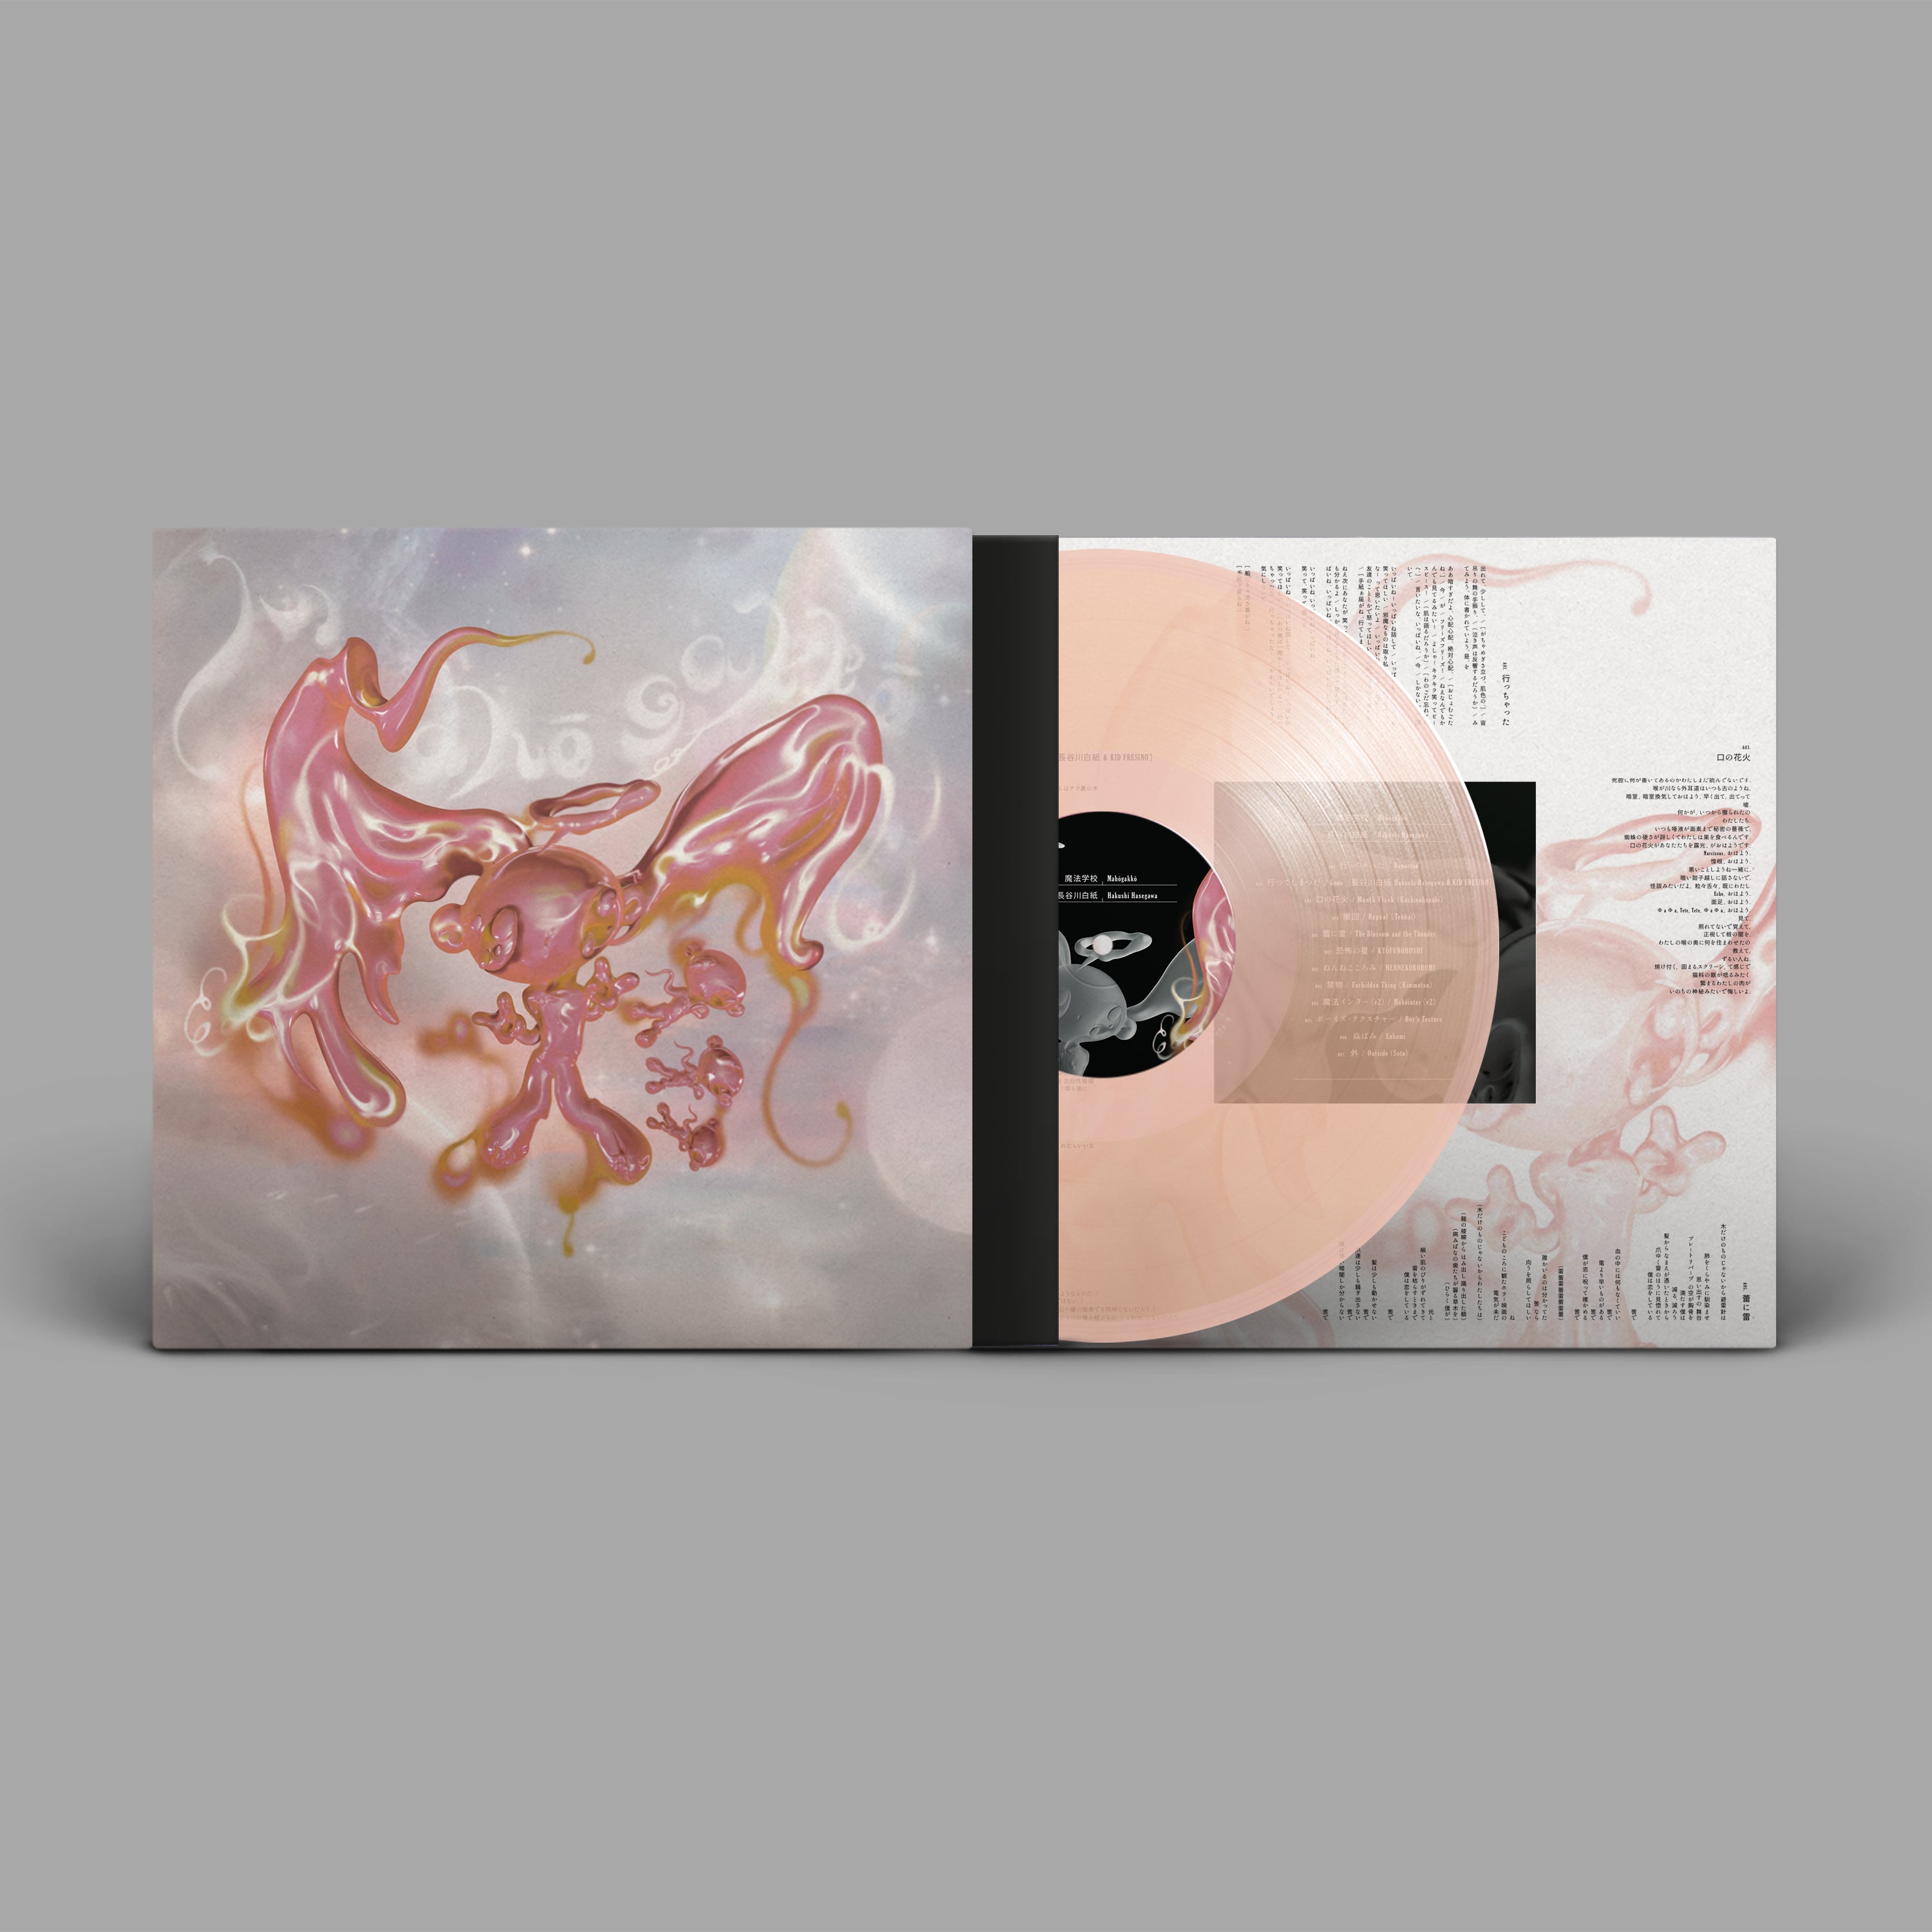 Hakushi Hasegawa - Mahōgakkō: Limited Translucent Rosé Pink Vinyl LP